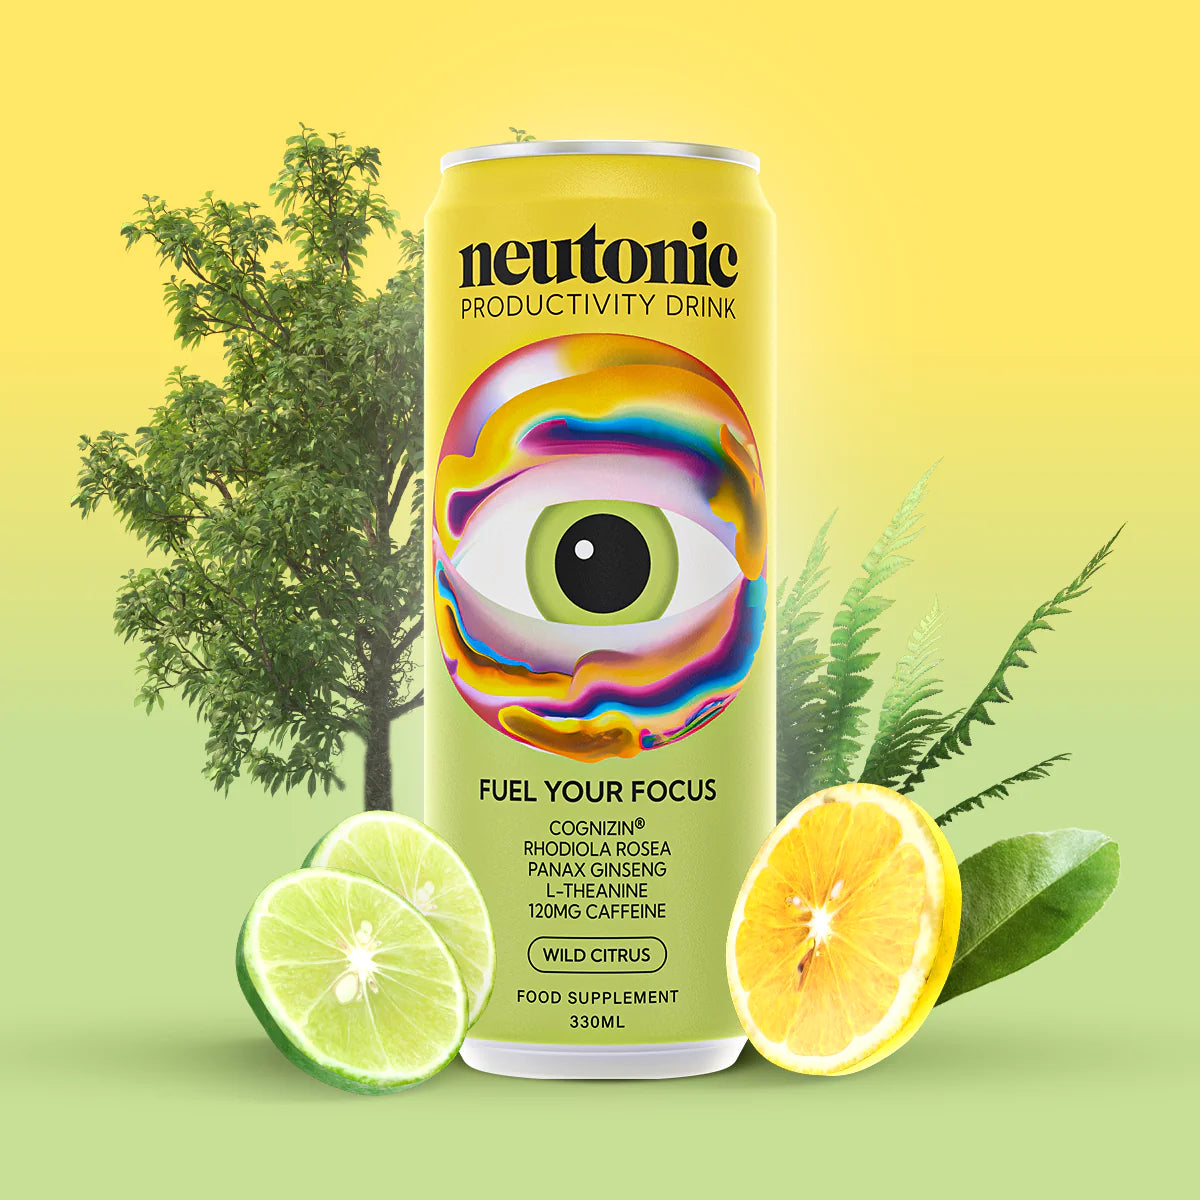 Neutonic - Wild Citrus Banner